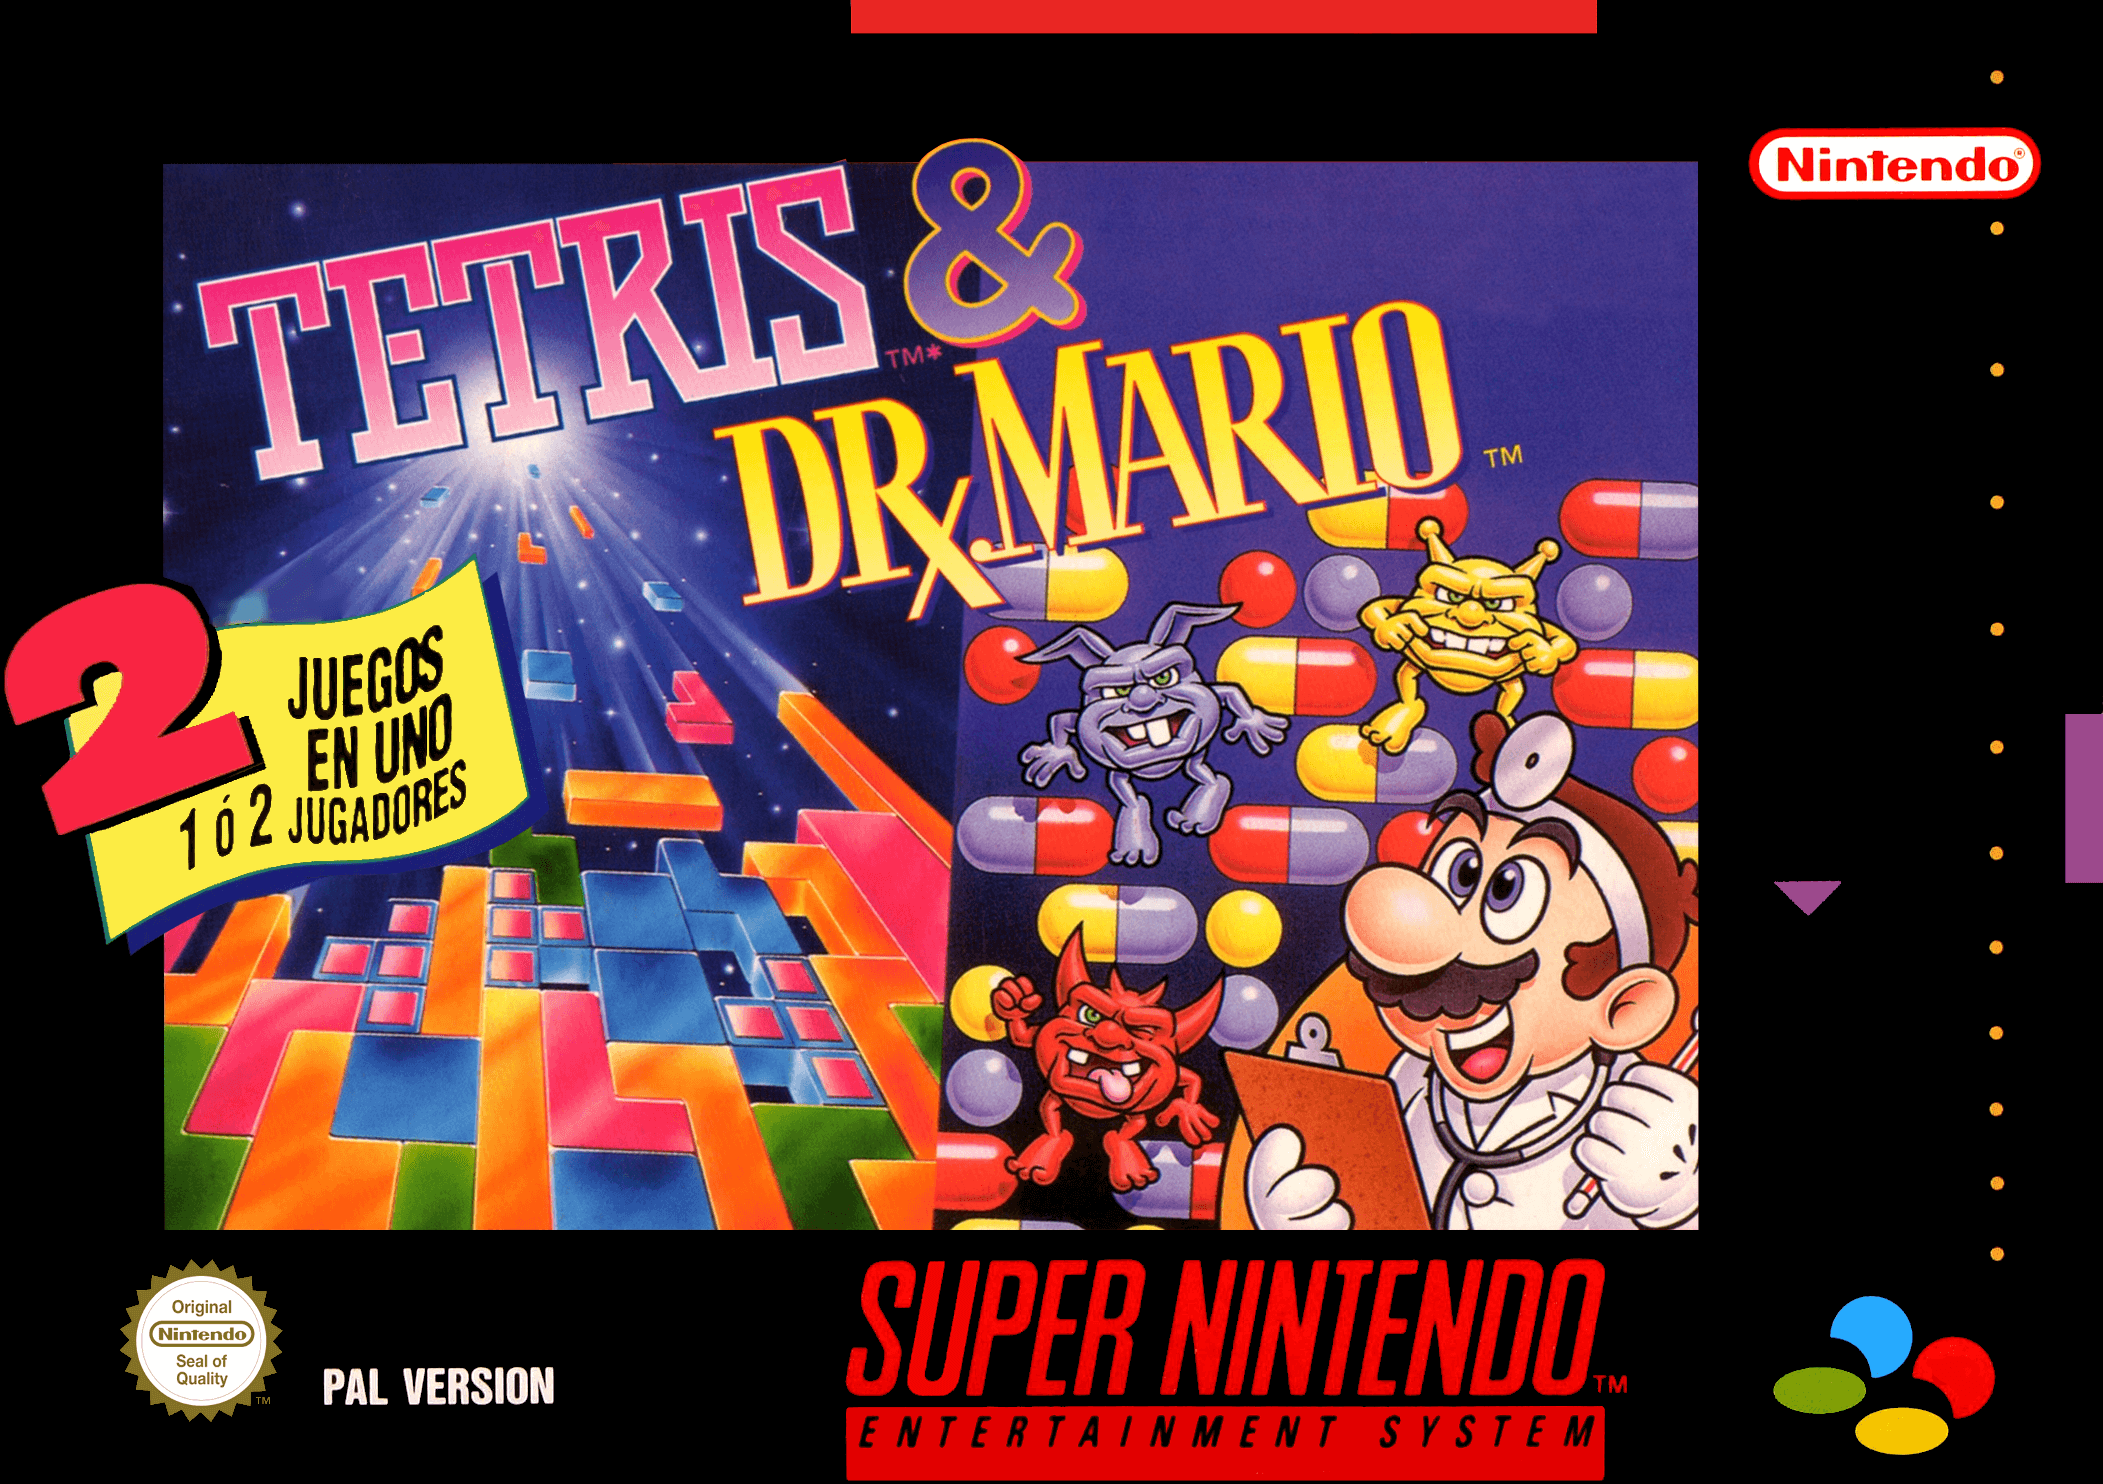 Tetris & Dr. Mario - Nintendo SNES ROM - Download